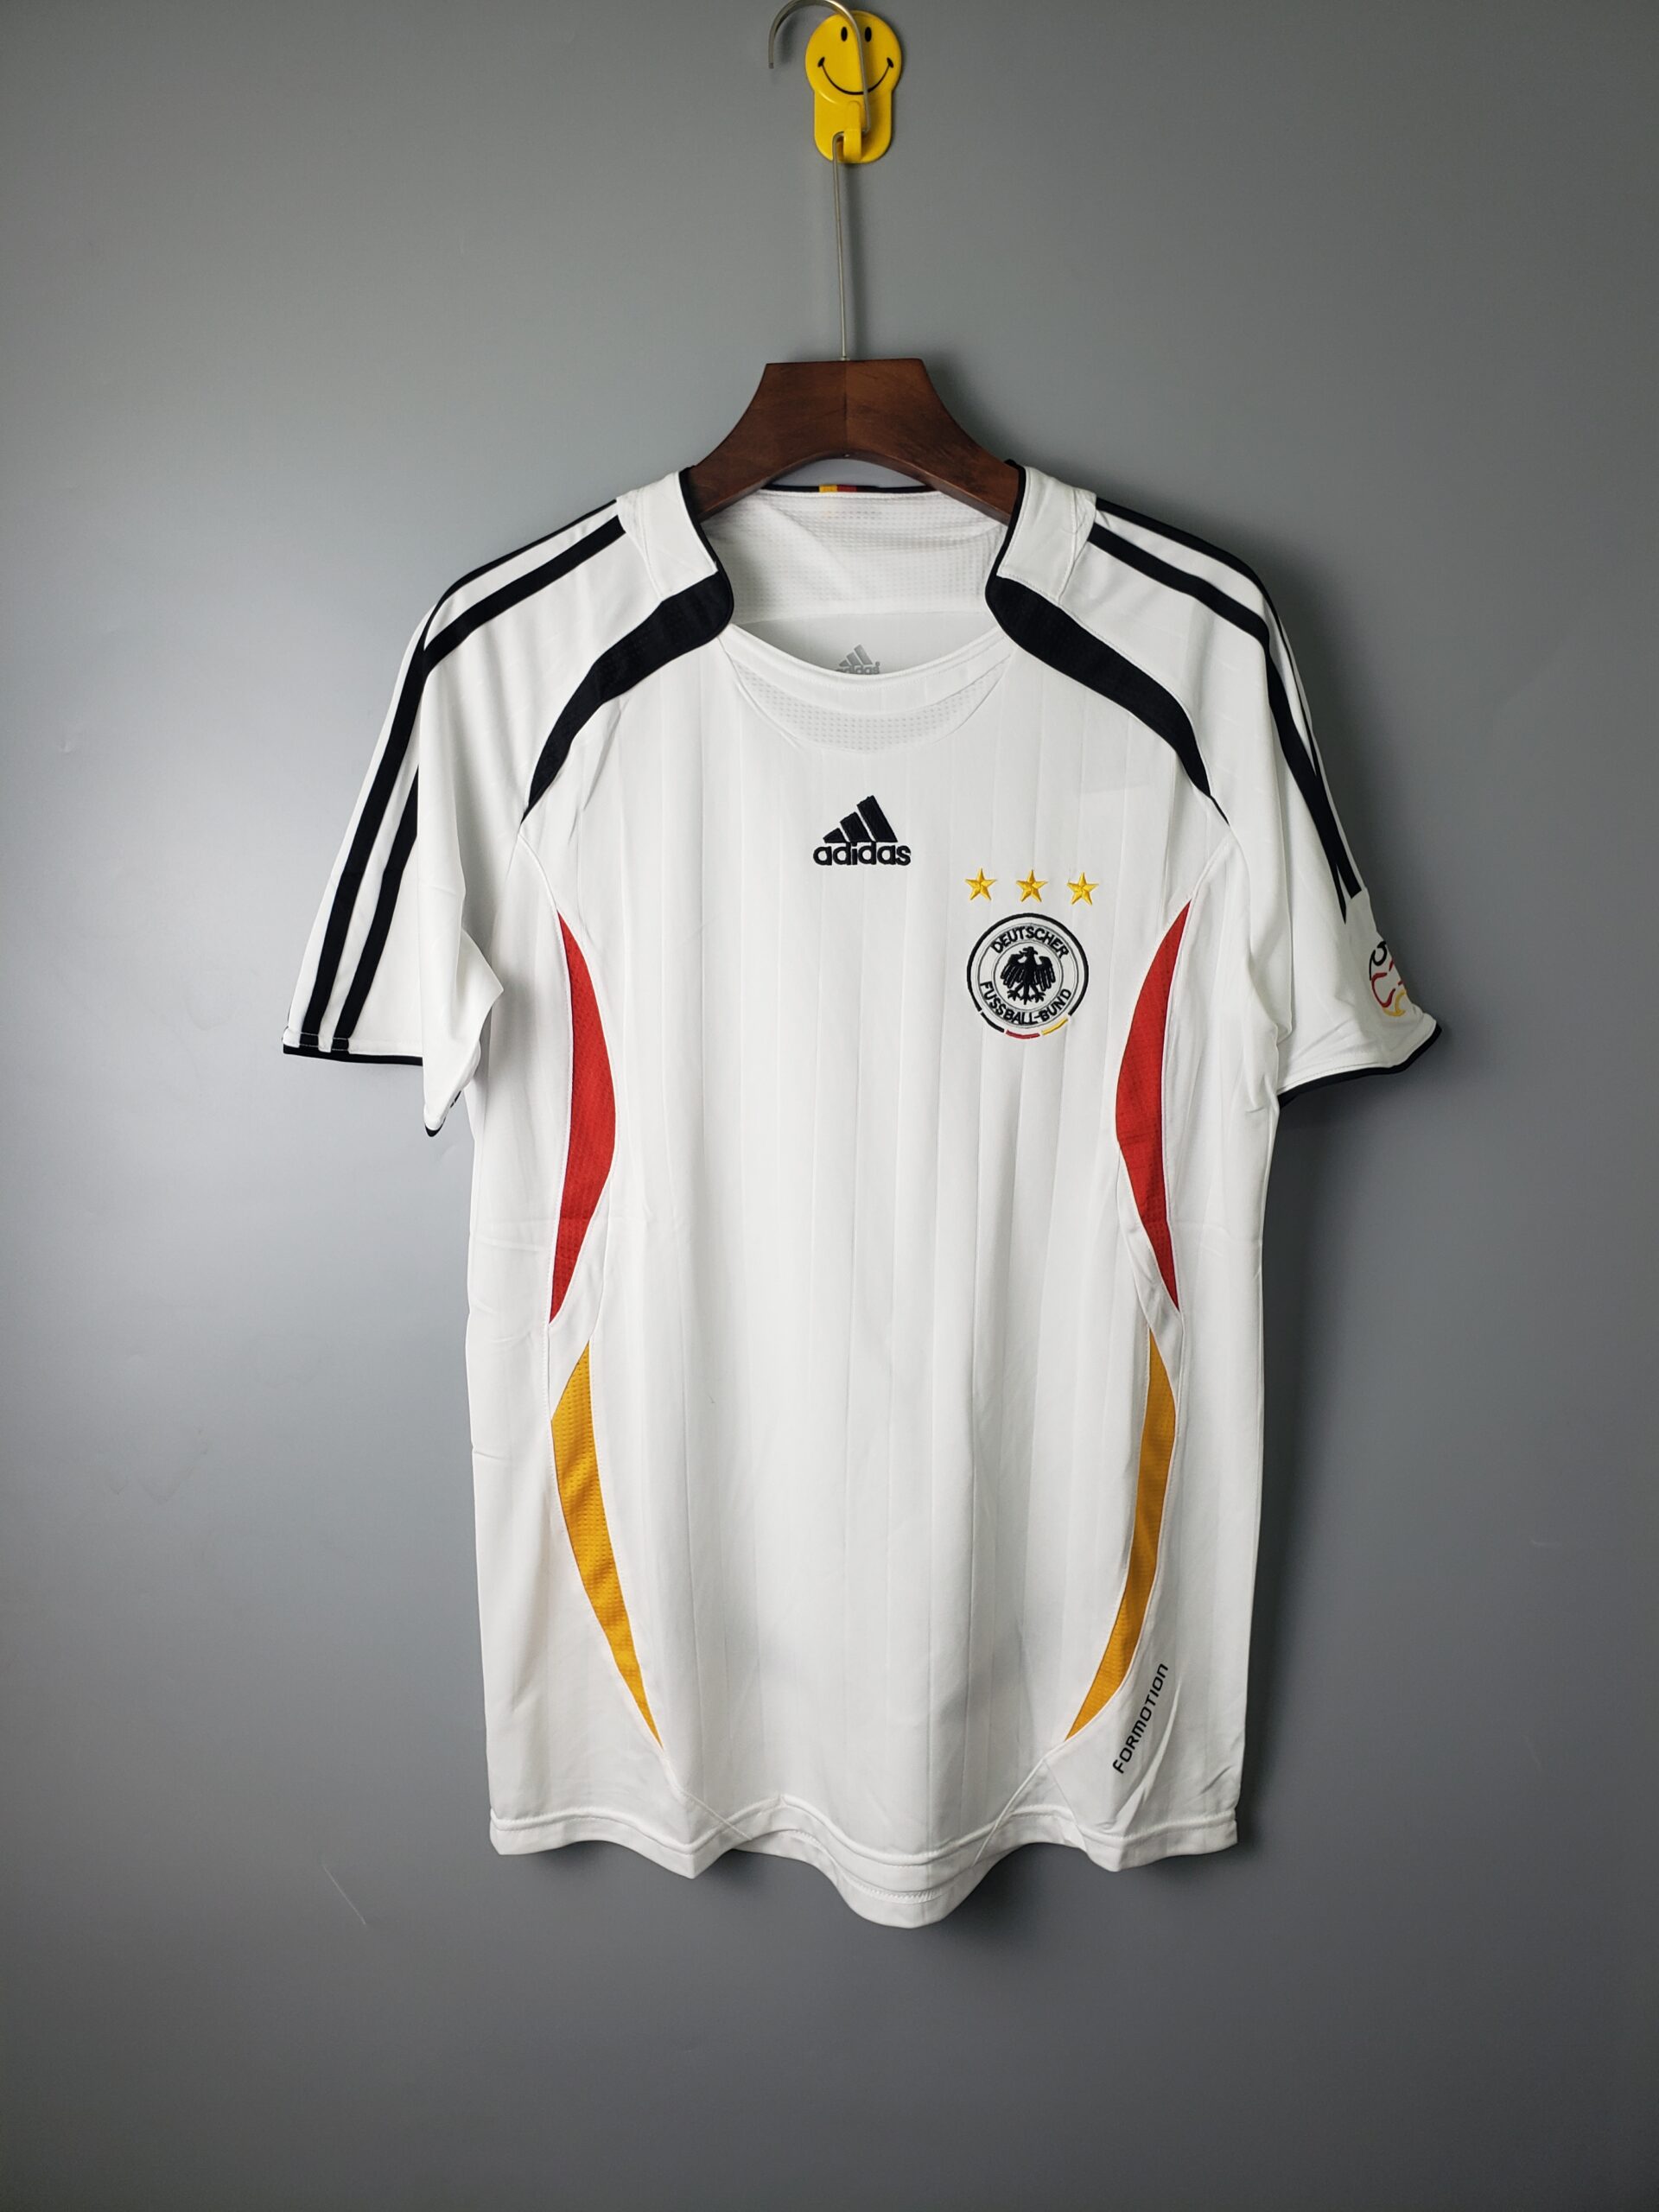 adidas, Shirts, Vintage Adidas Euro Cup 996 Germany Soccer Jersey